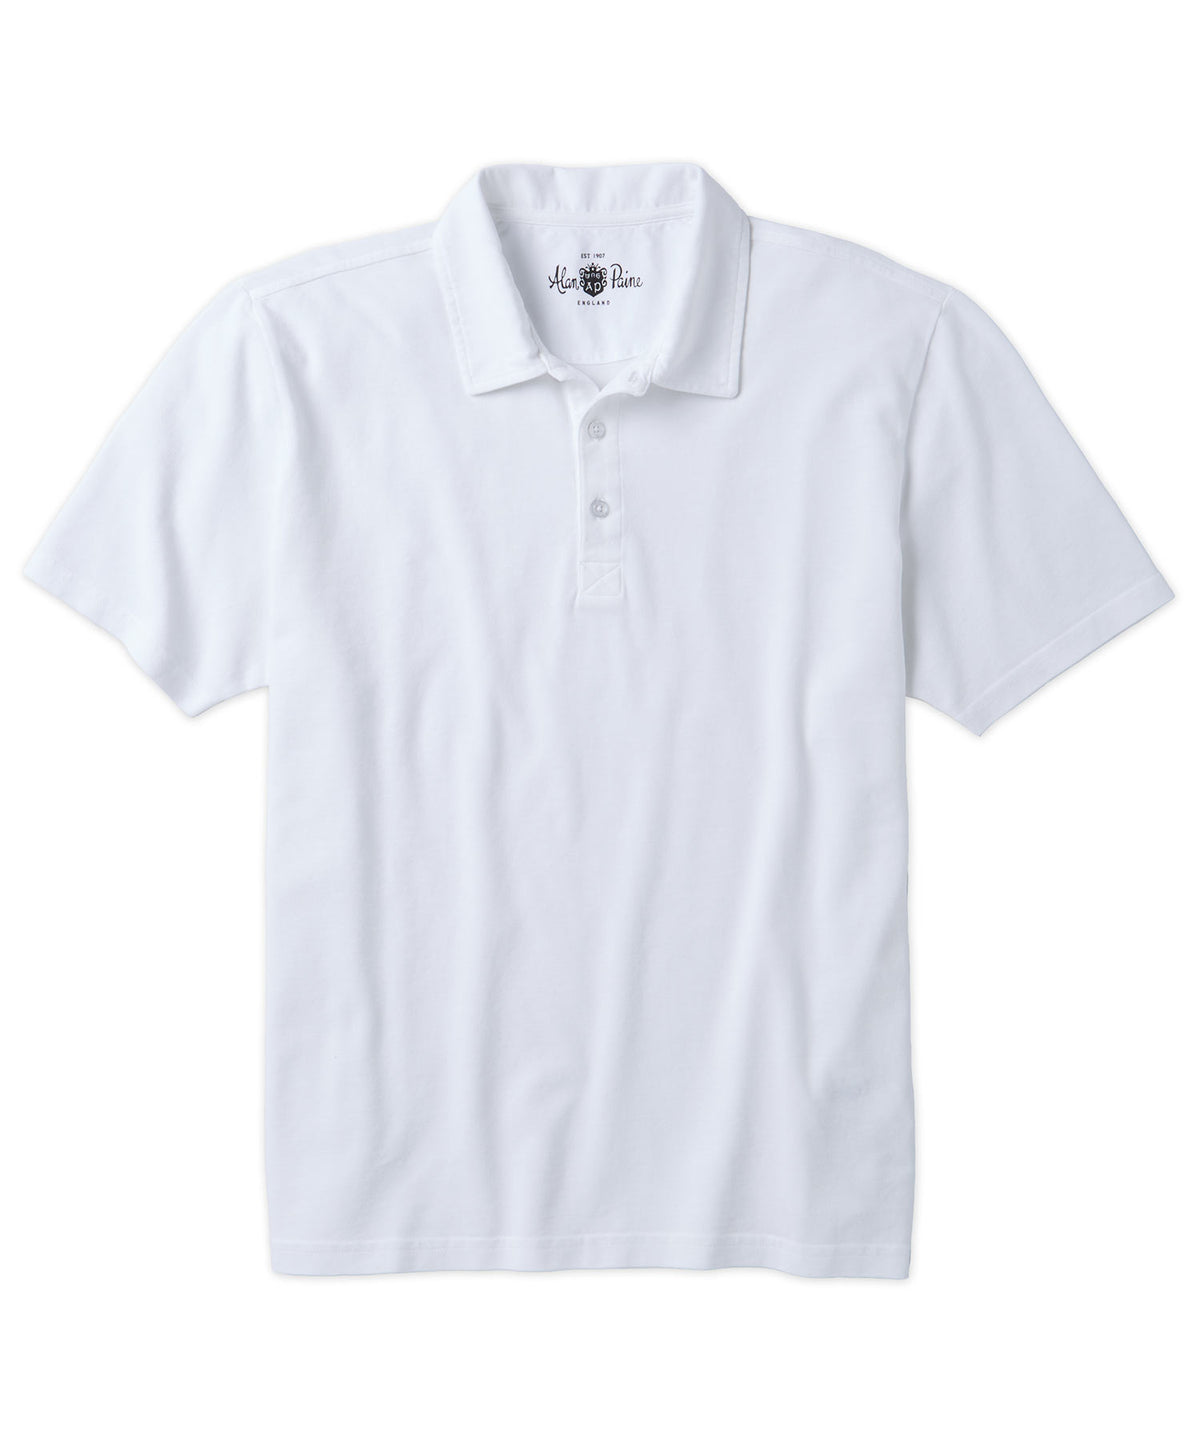 Alan Paine Weymouth Garment Dyed Cotton Pique Polo Shirt